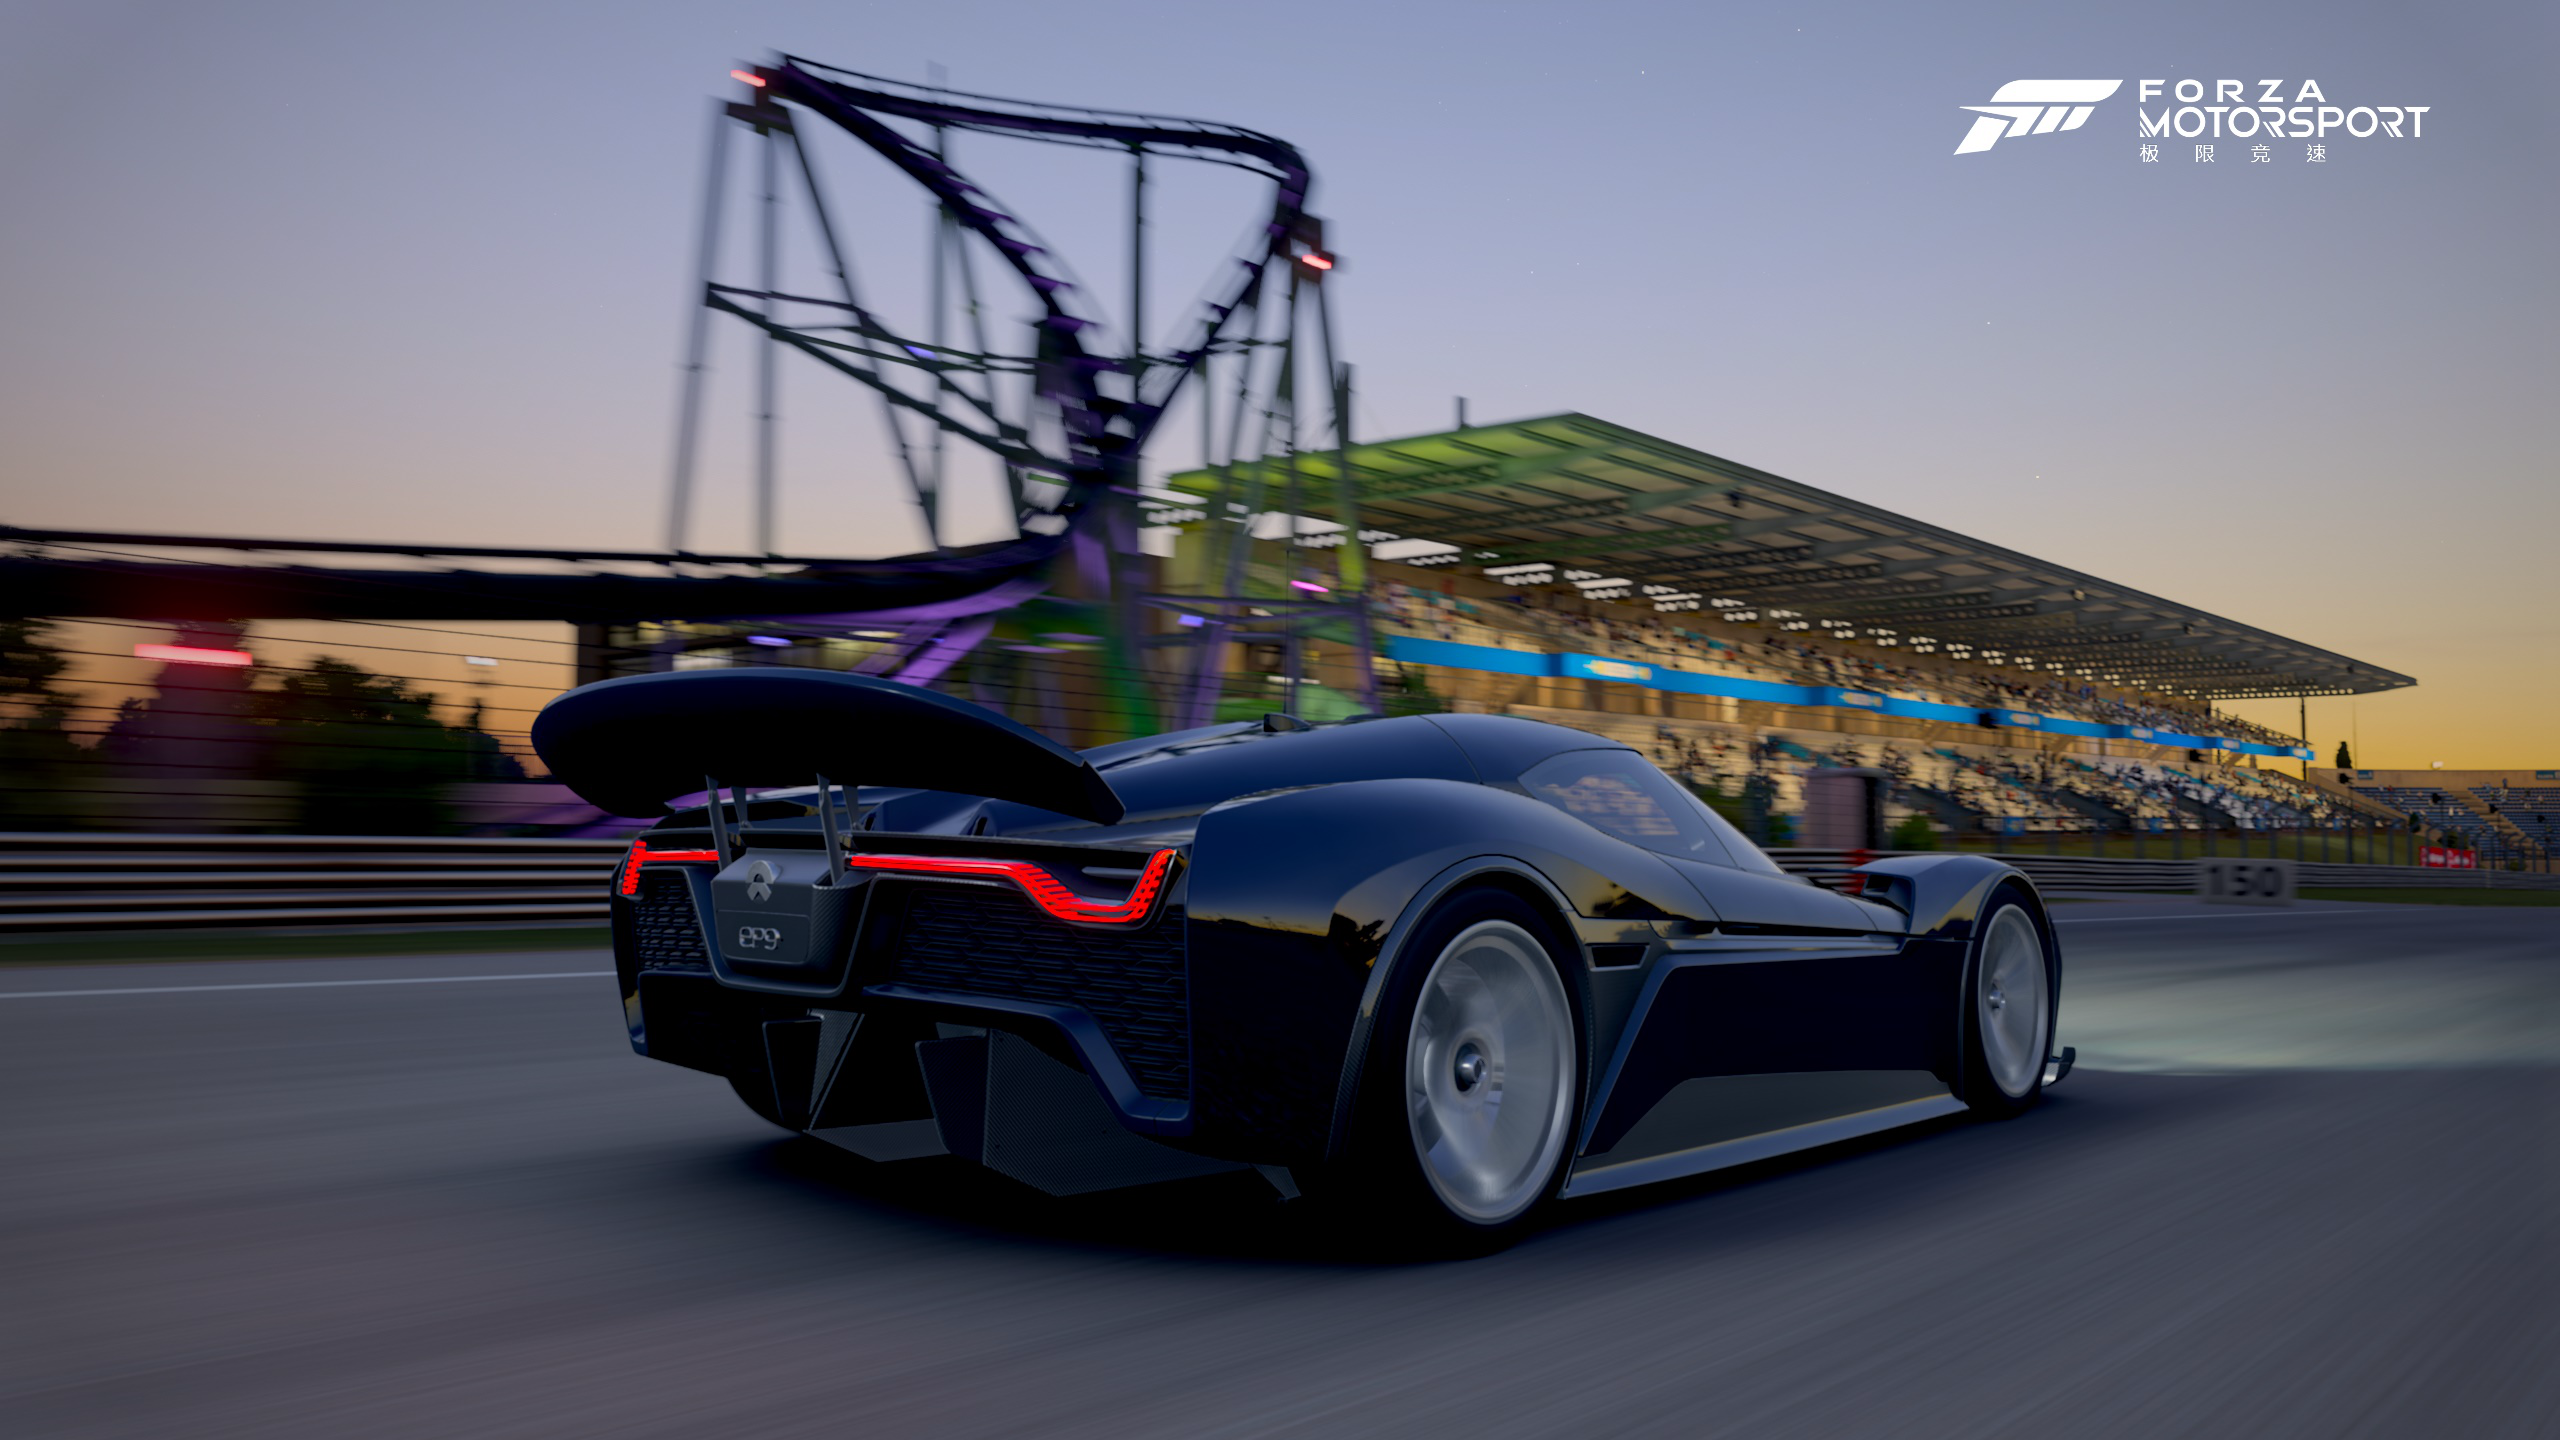 给 Forza Motorsport 新手玩家的两个小Tips